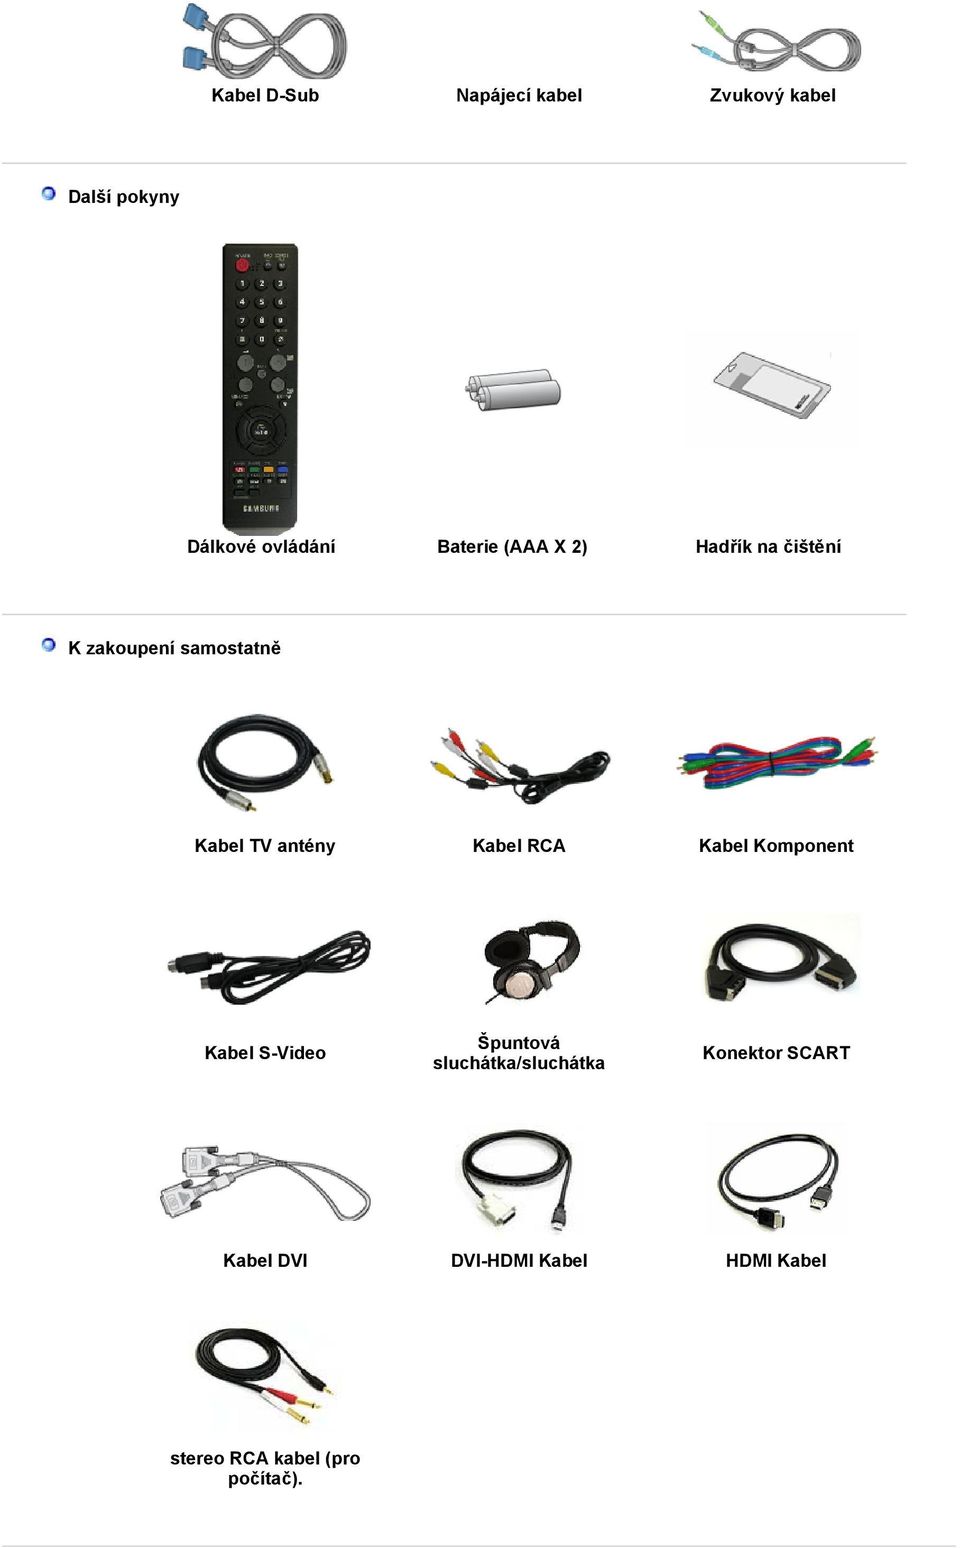 Kabel RCA Kabel Komponent Kabel S-Video Špuntová sluchátka/sluchátka